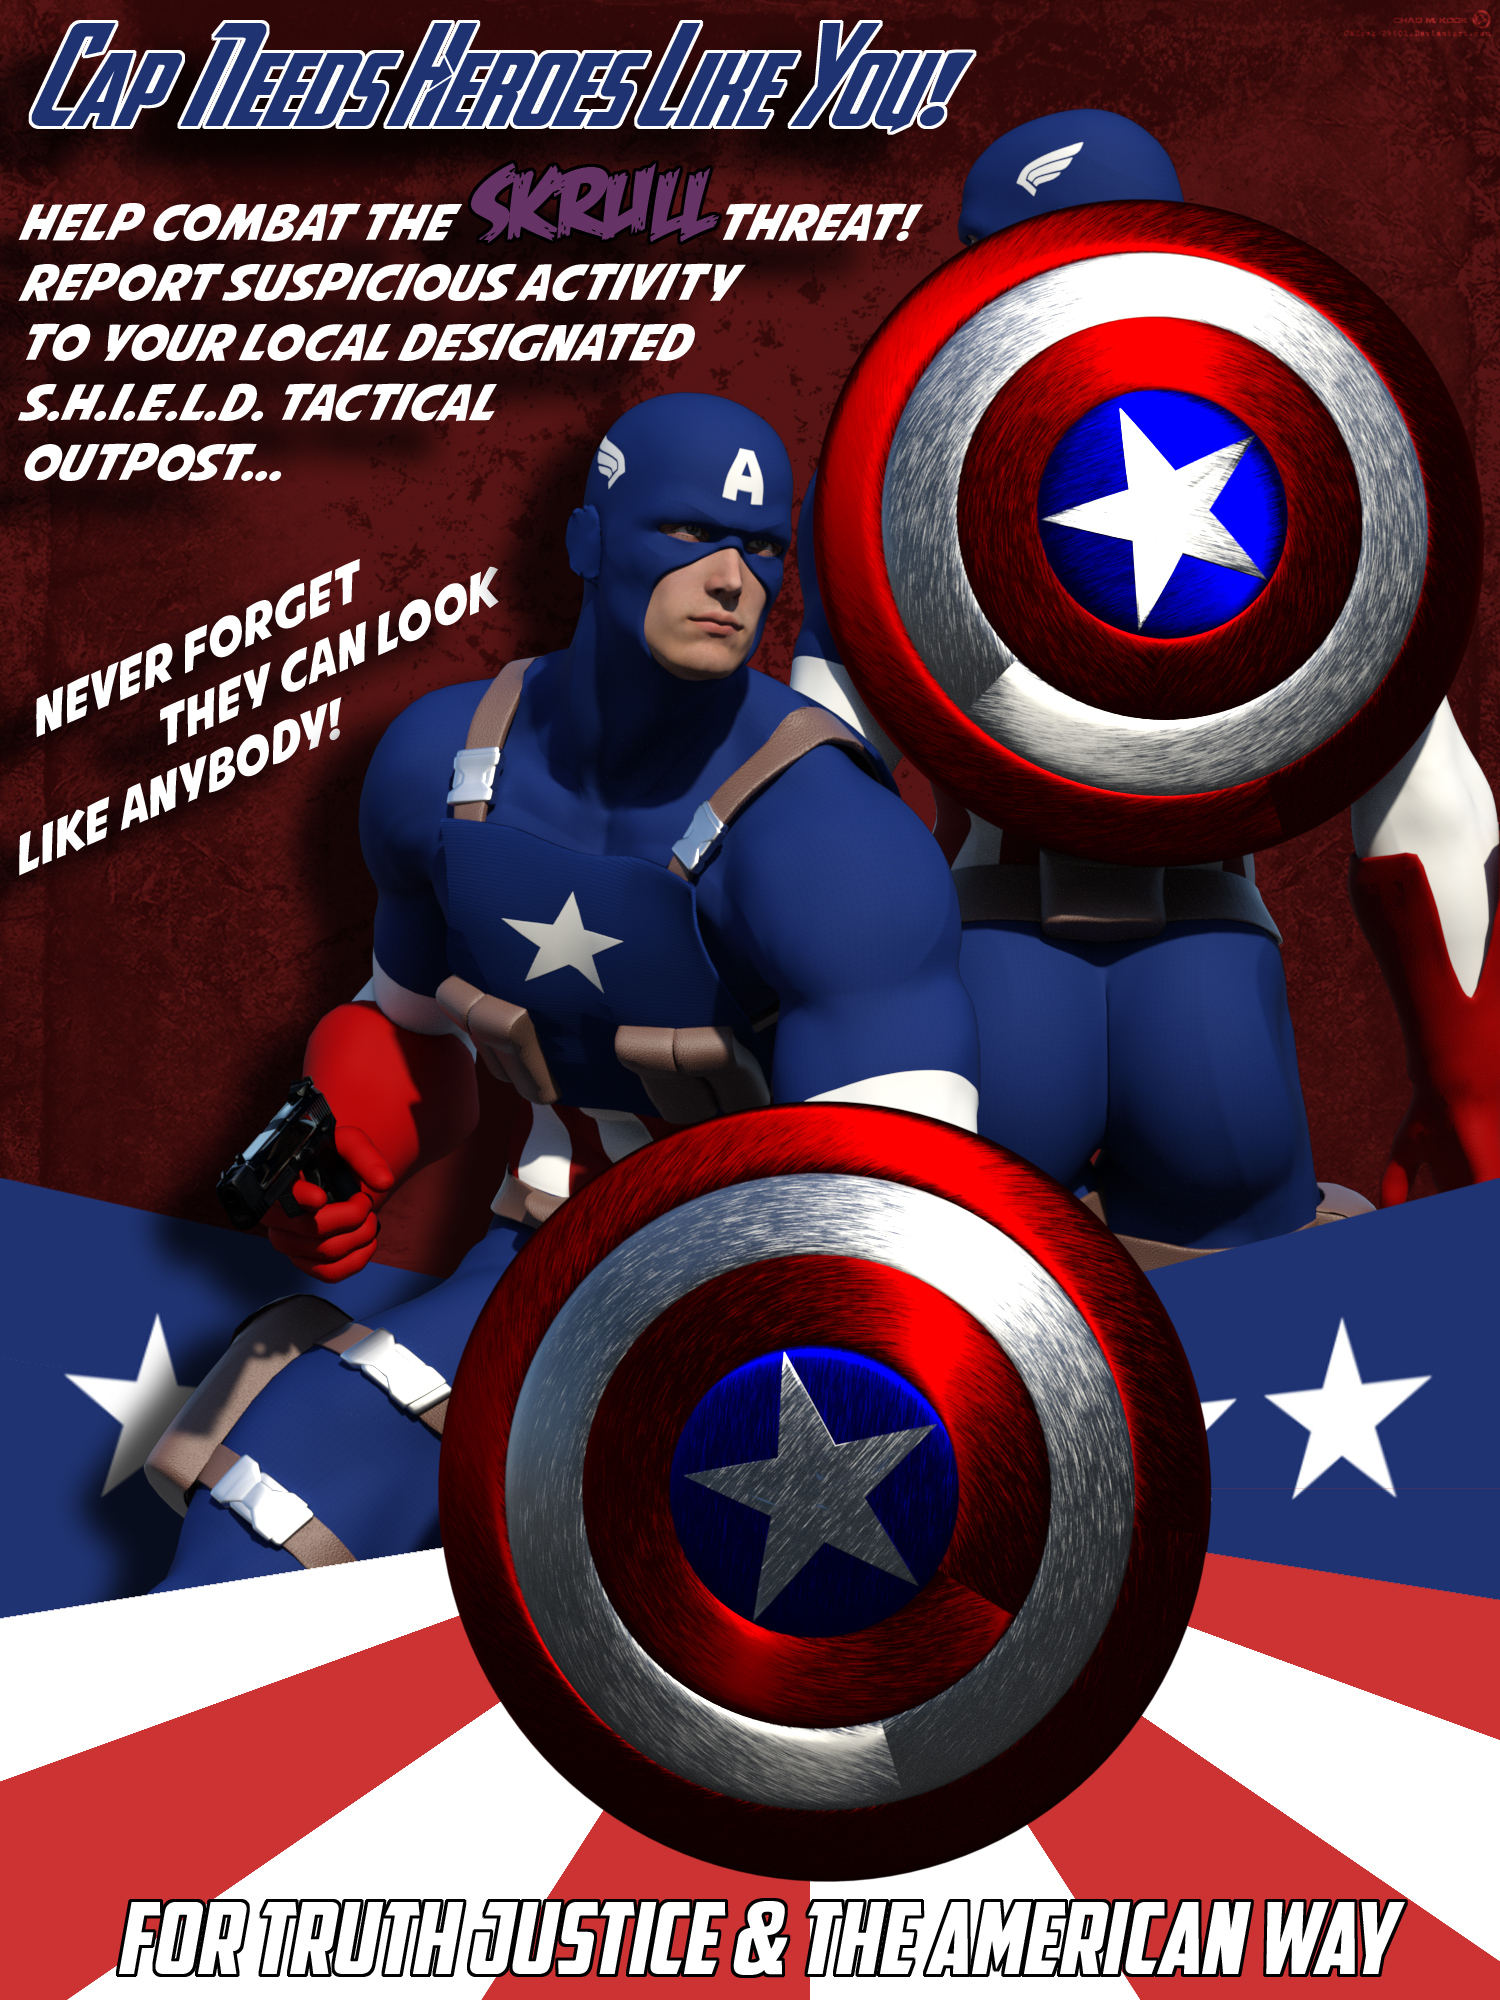 Cap Needs Heroes Like You!